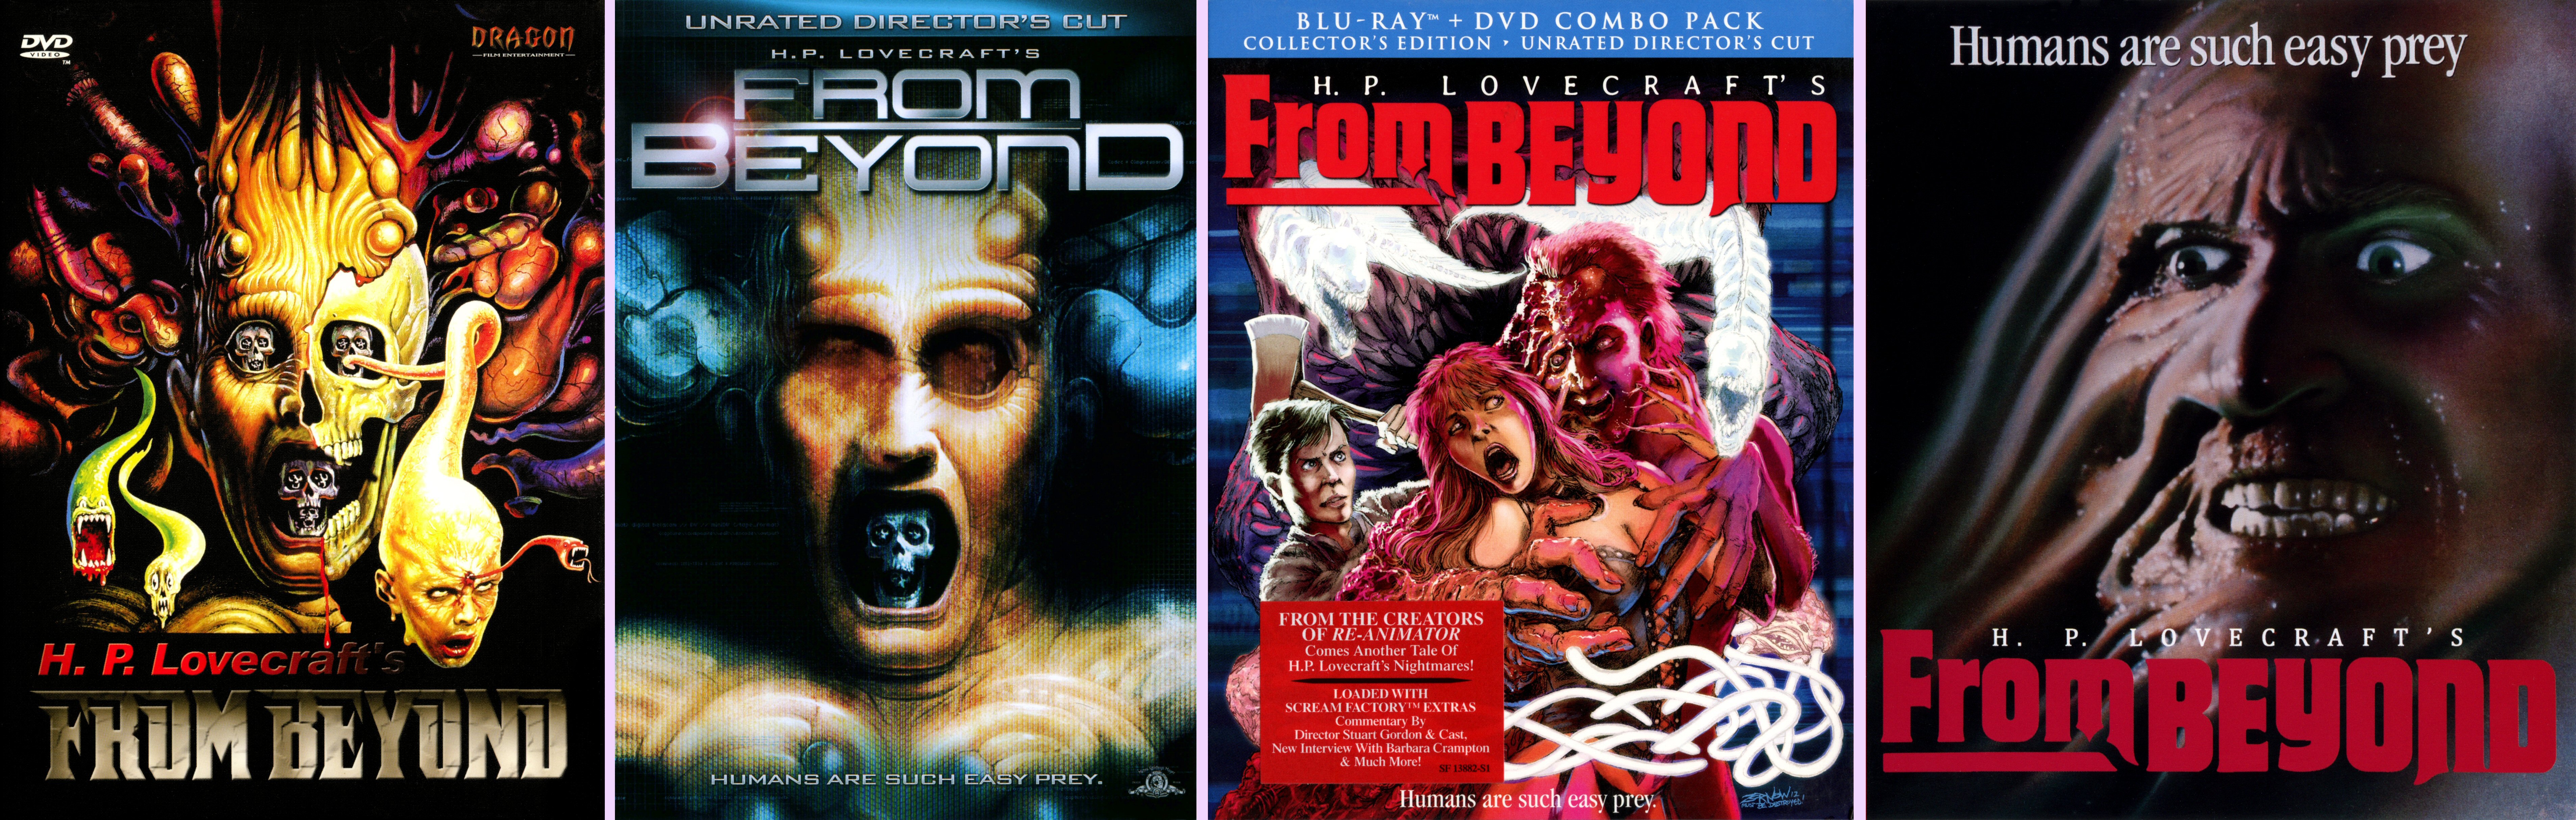 Aliens vs. Predator: Requiem (Unrated) - Movies on Google Play